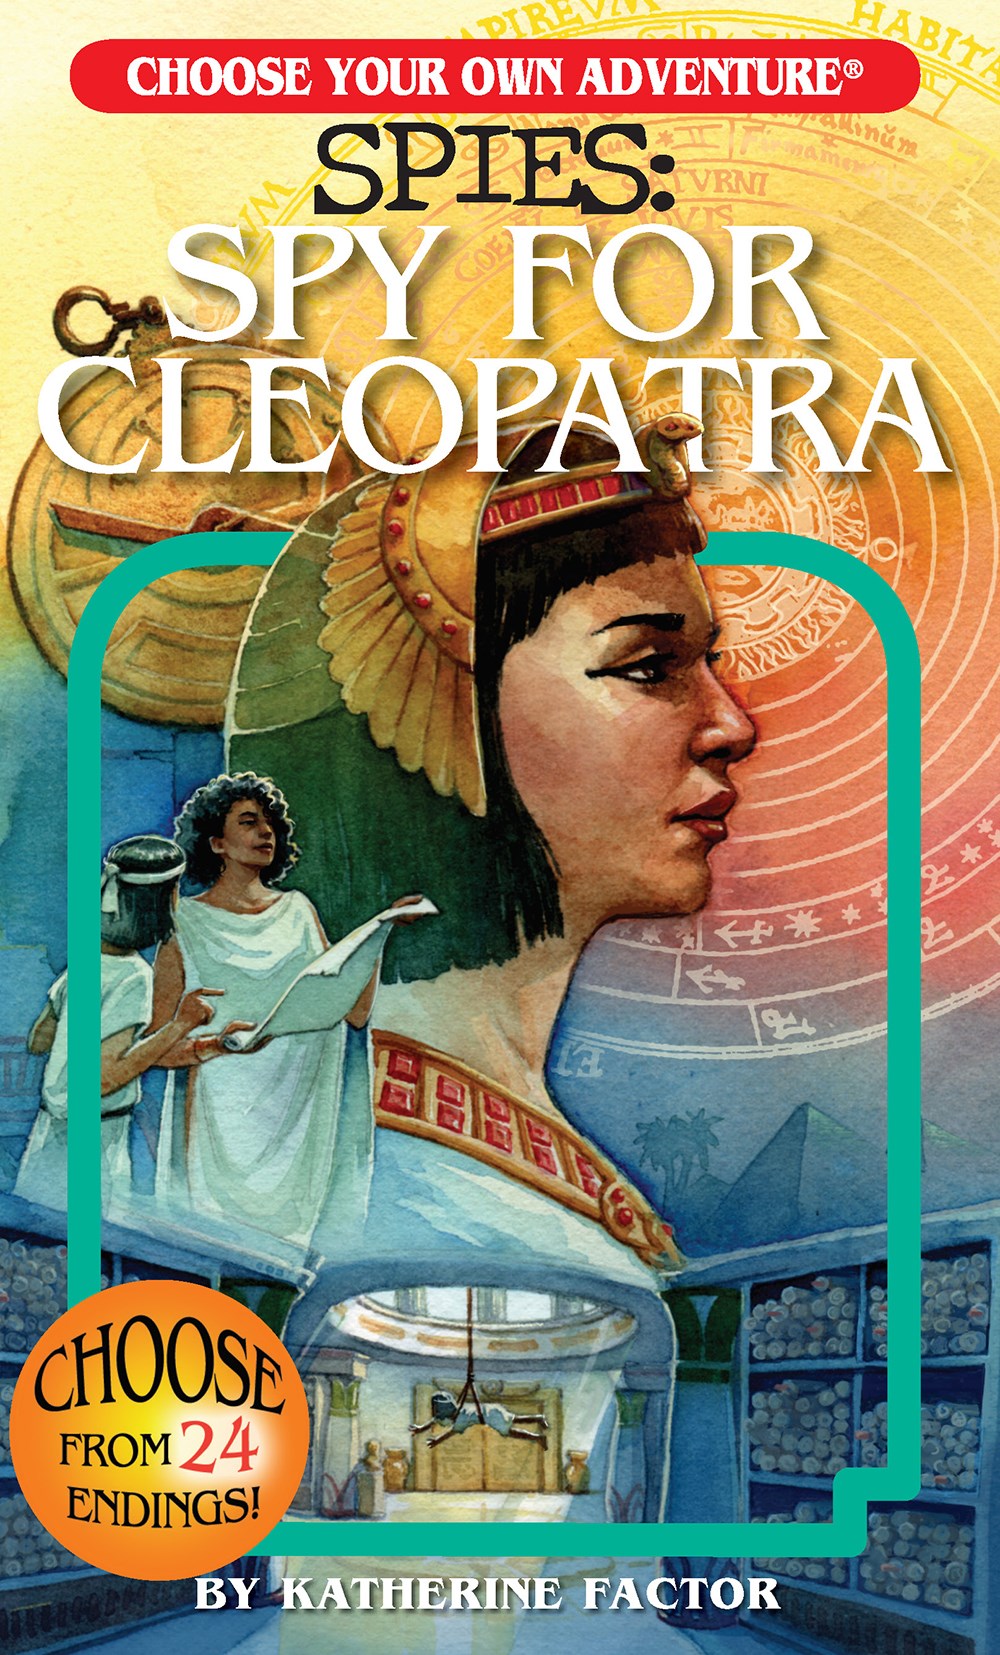 Choose Your Own Adventure Spies: Mata Hari [Book]